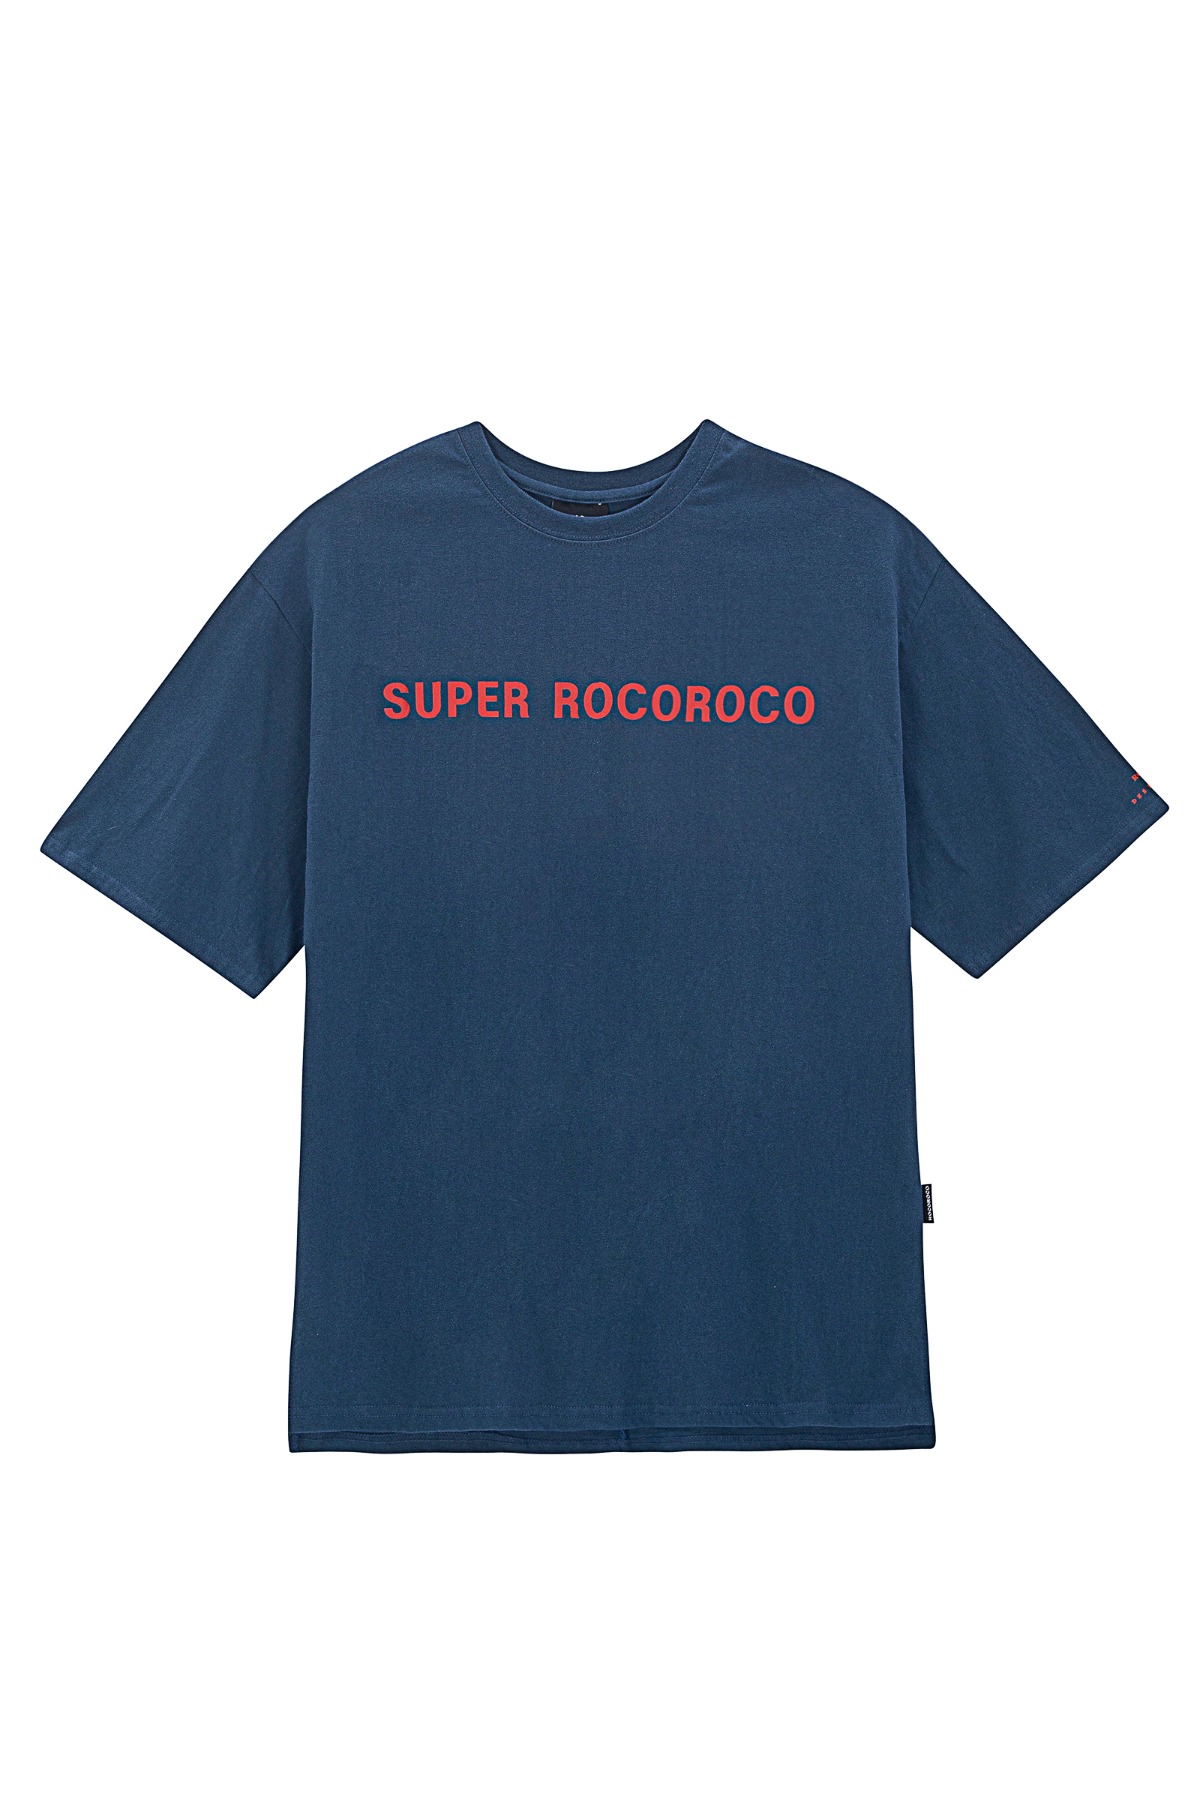 Super Roco T deep blue